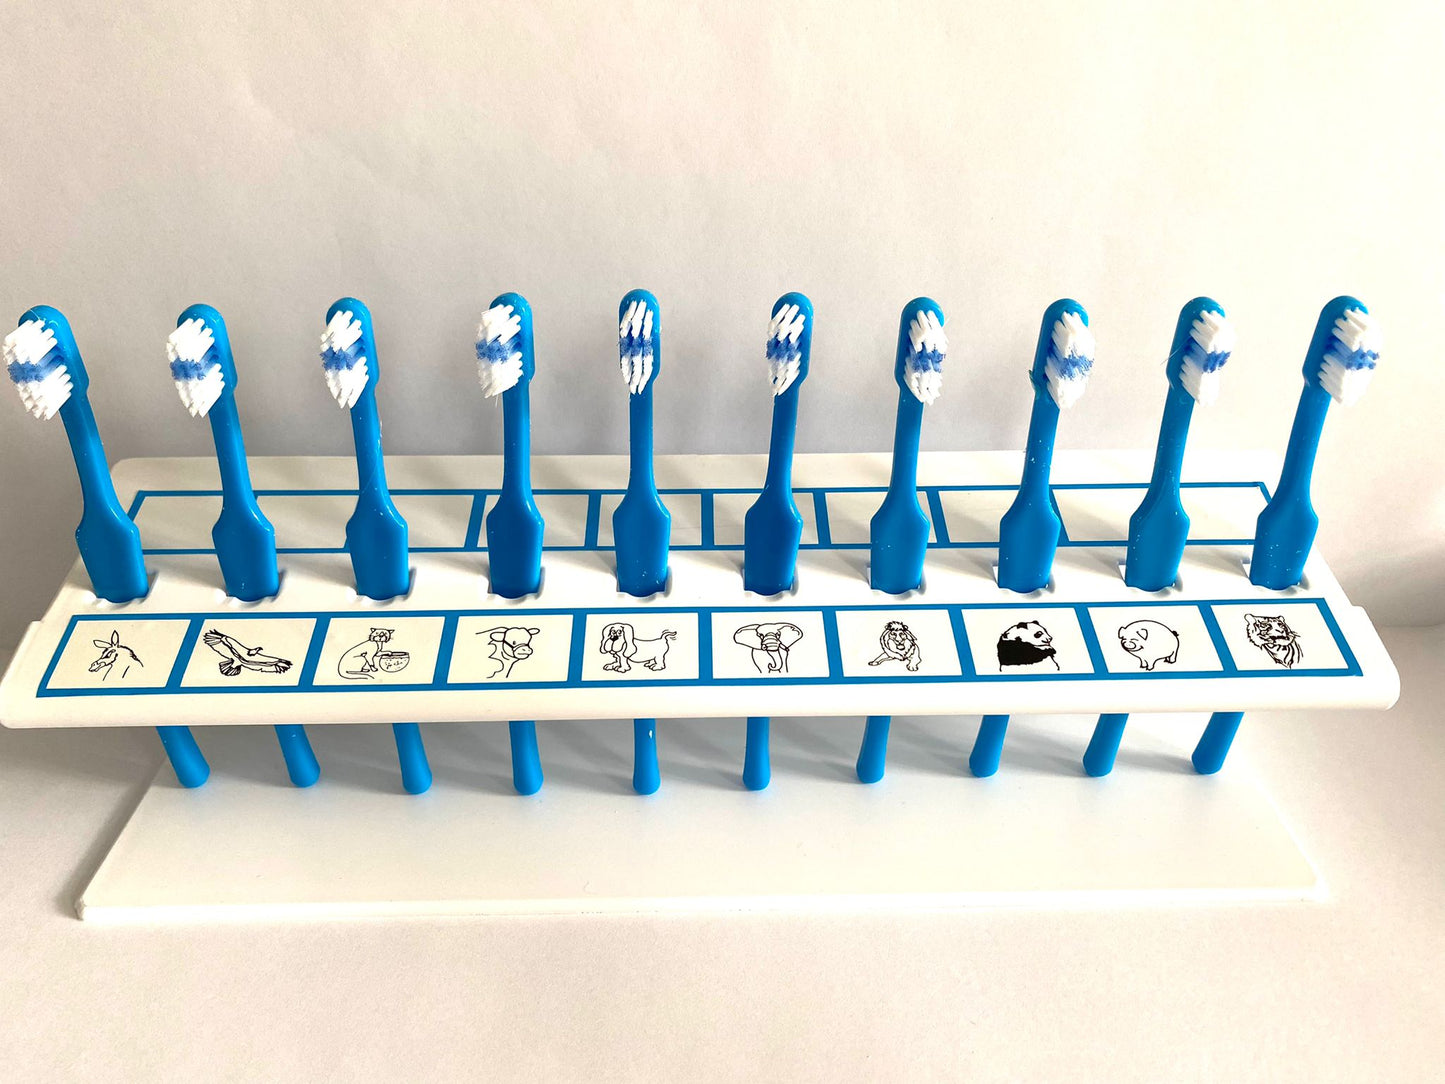 Toothbrush Rack with Animal symbols